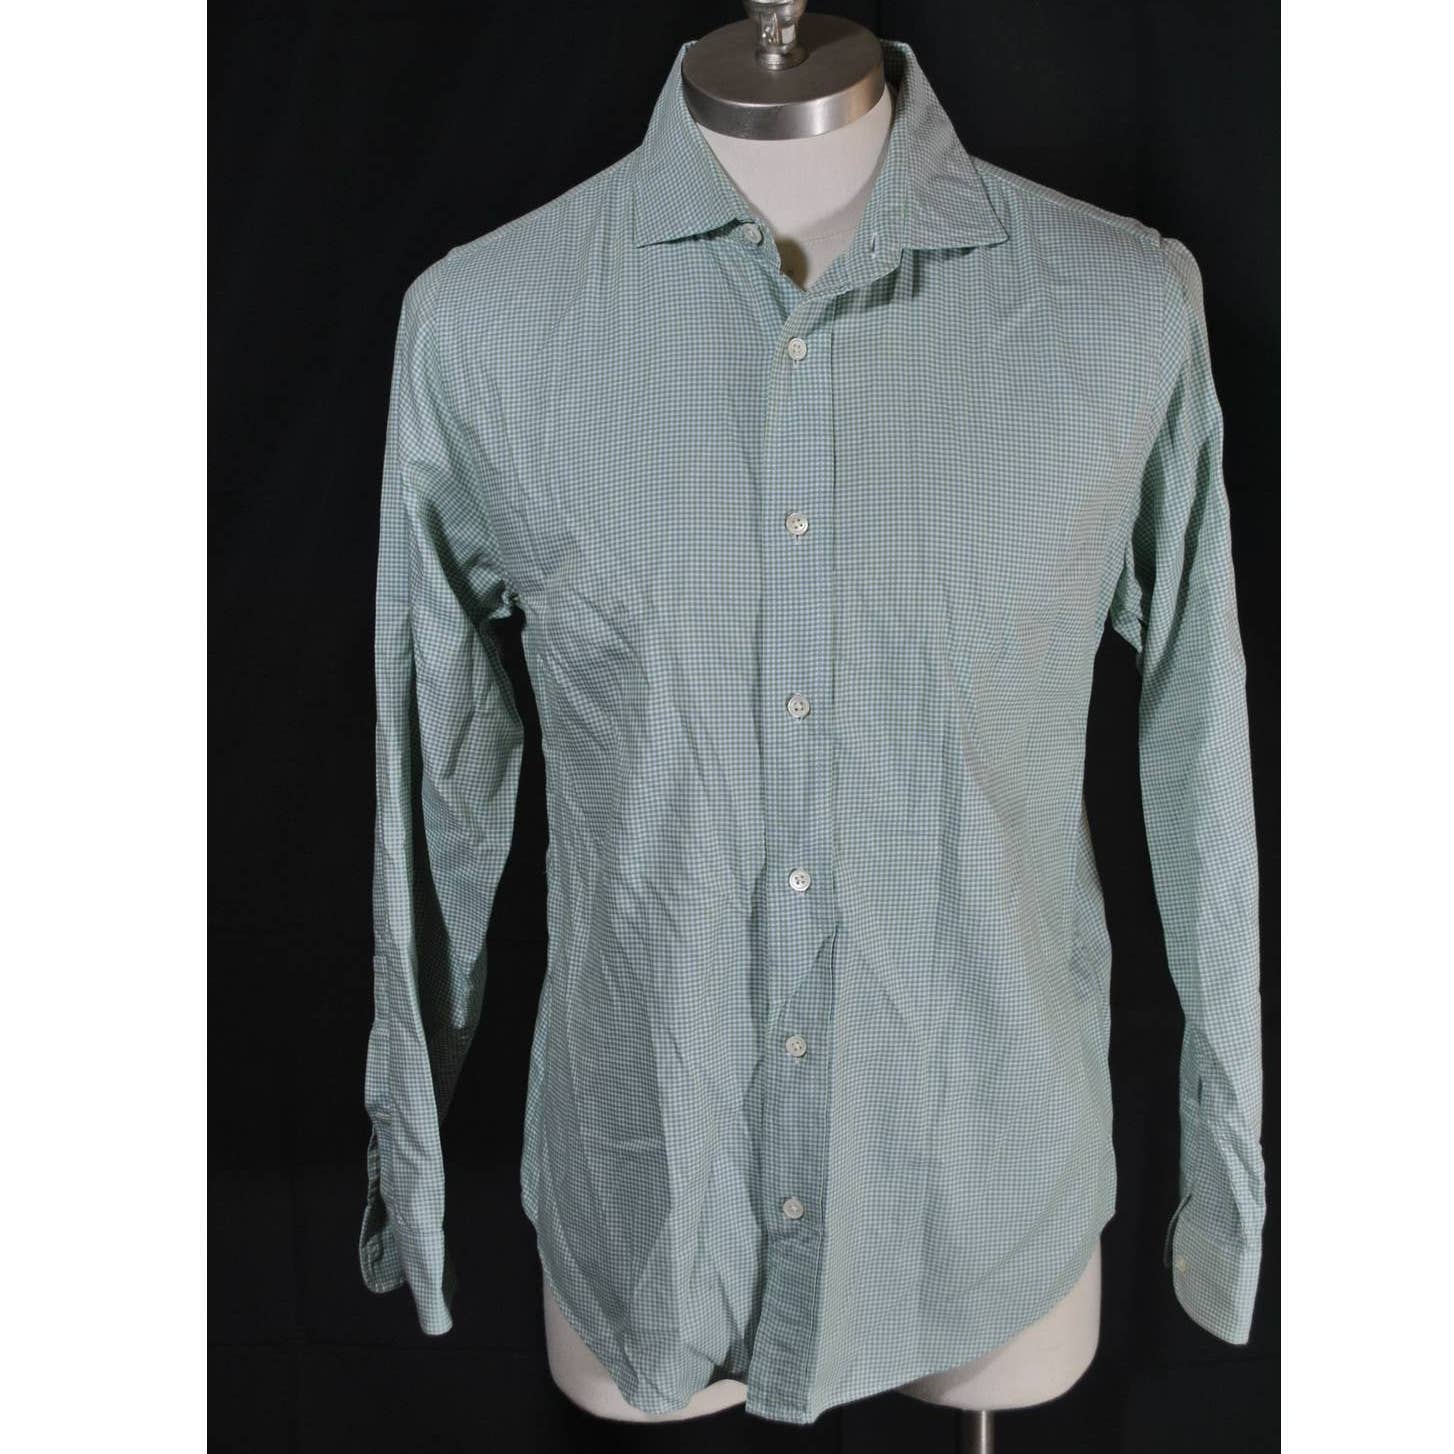 Jack Spade Green White Gingham Spread Collar Shirt - M